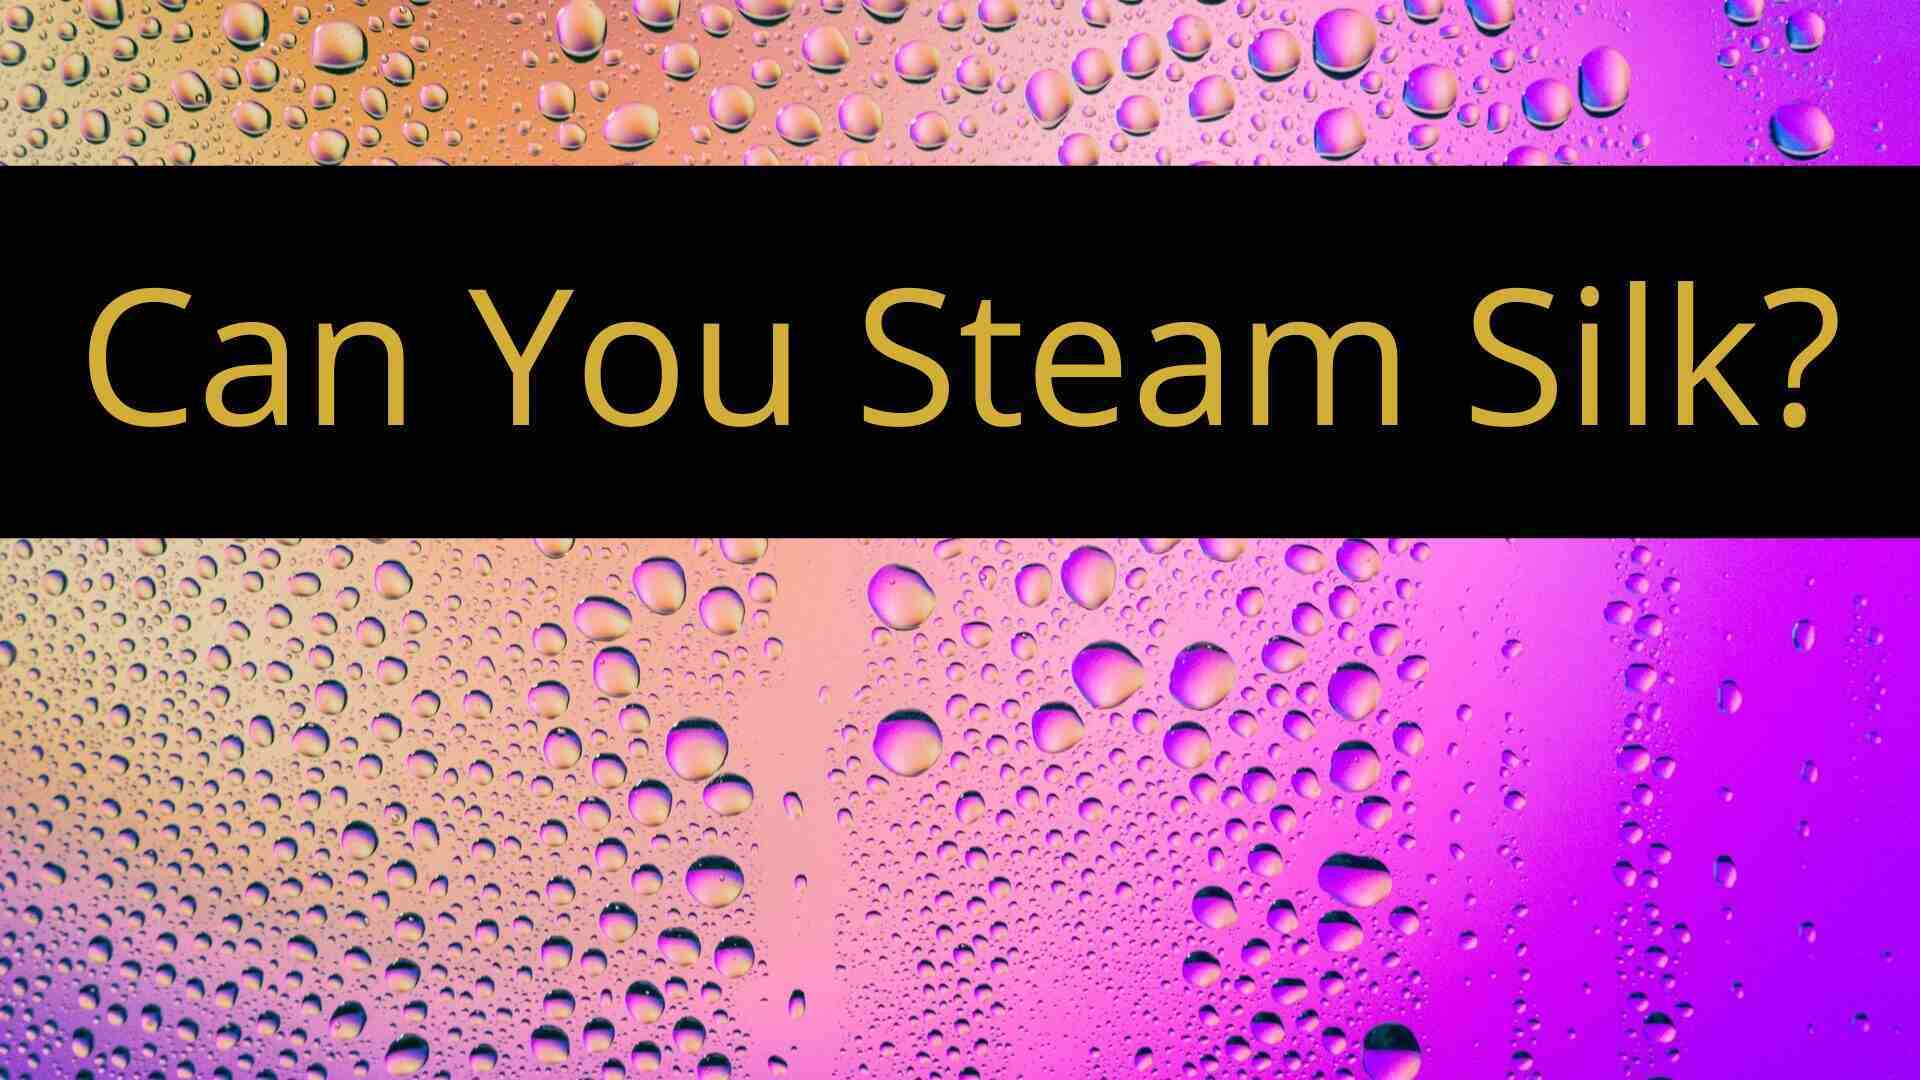 can you steam silk header image